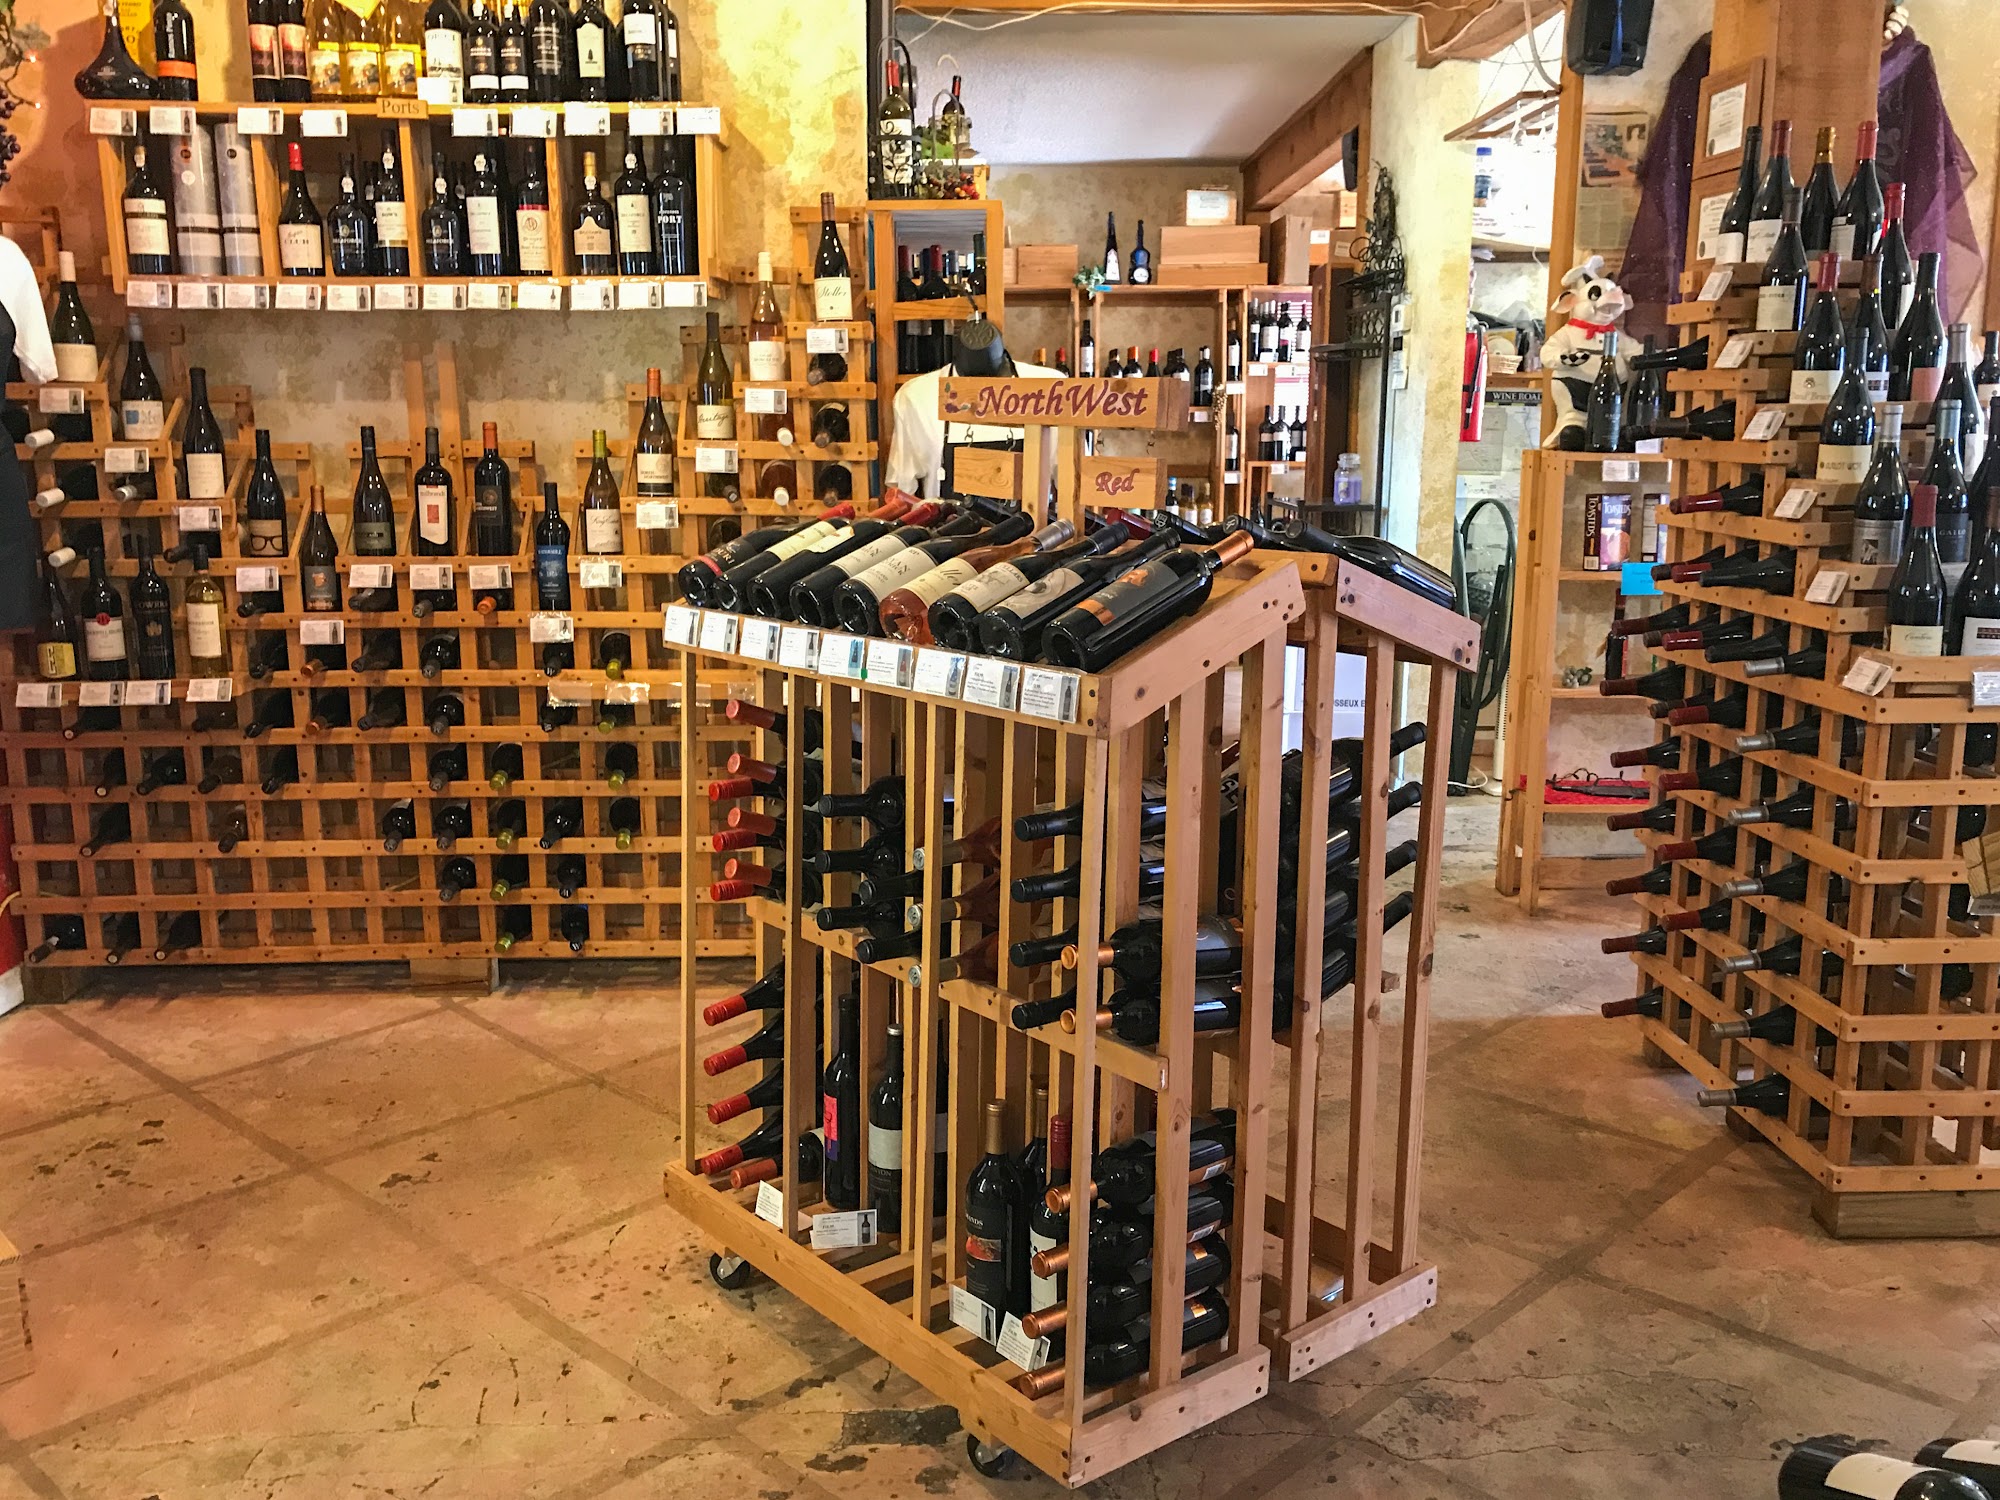 The Wine Cellars of Mount Dora